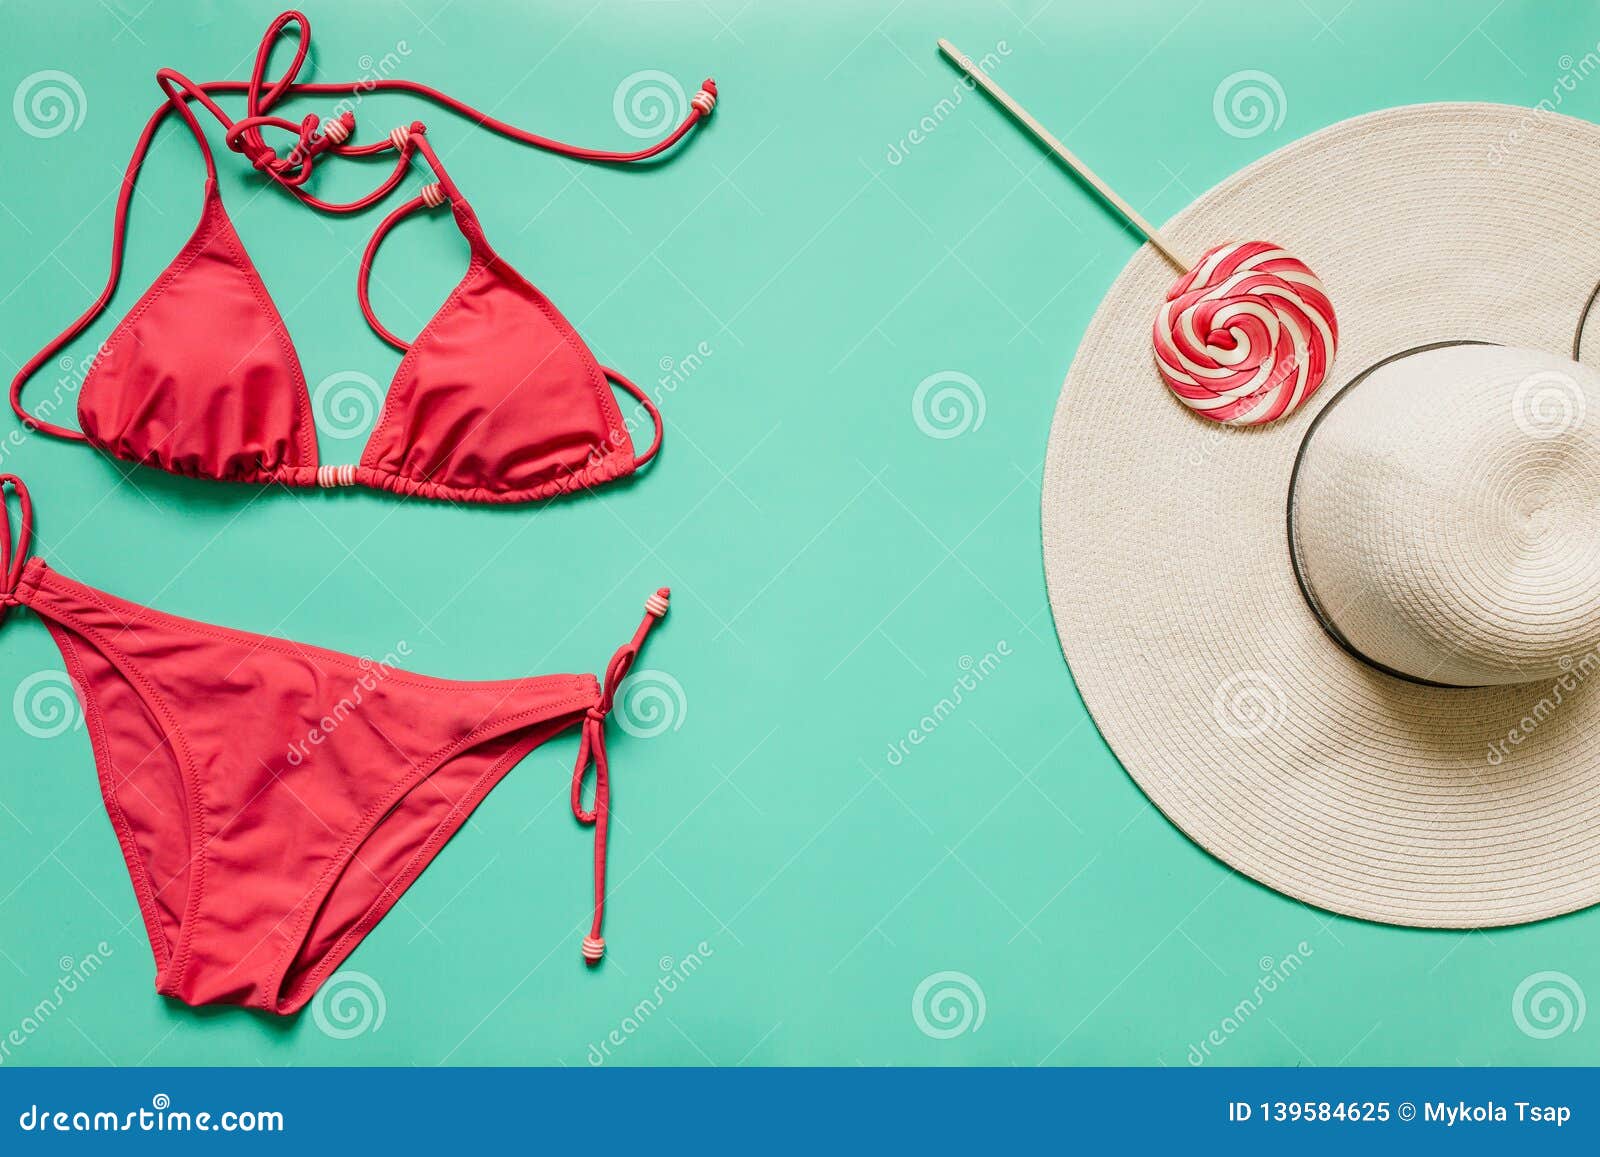 Red, Pink Bikini Suit, Lollipop, White Hat on Plain Light Cyan ...